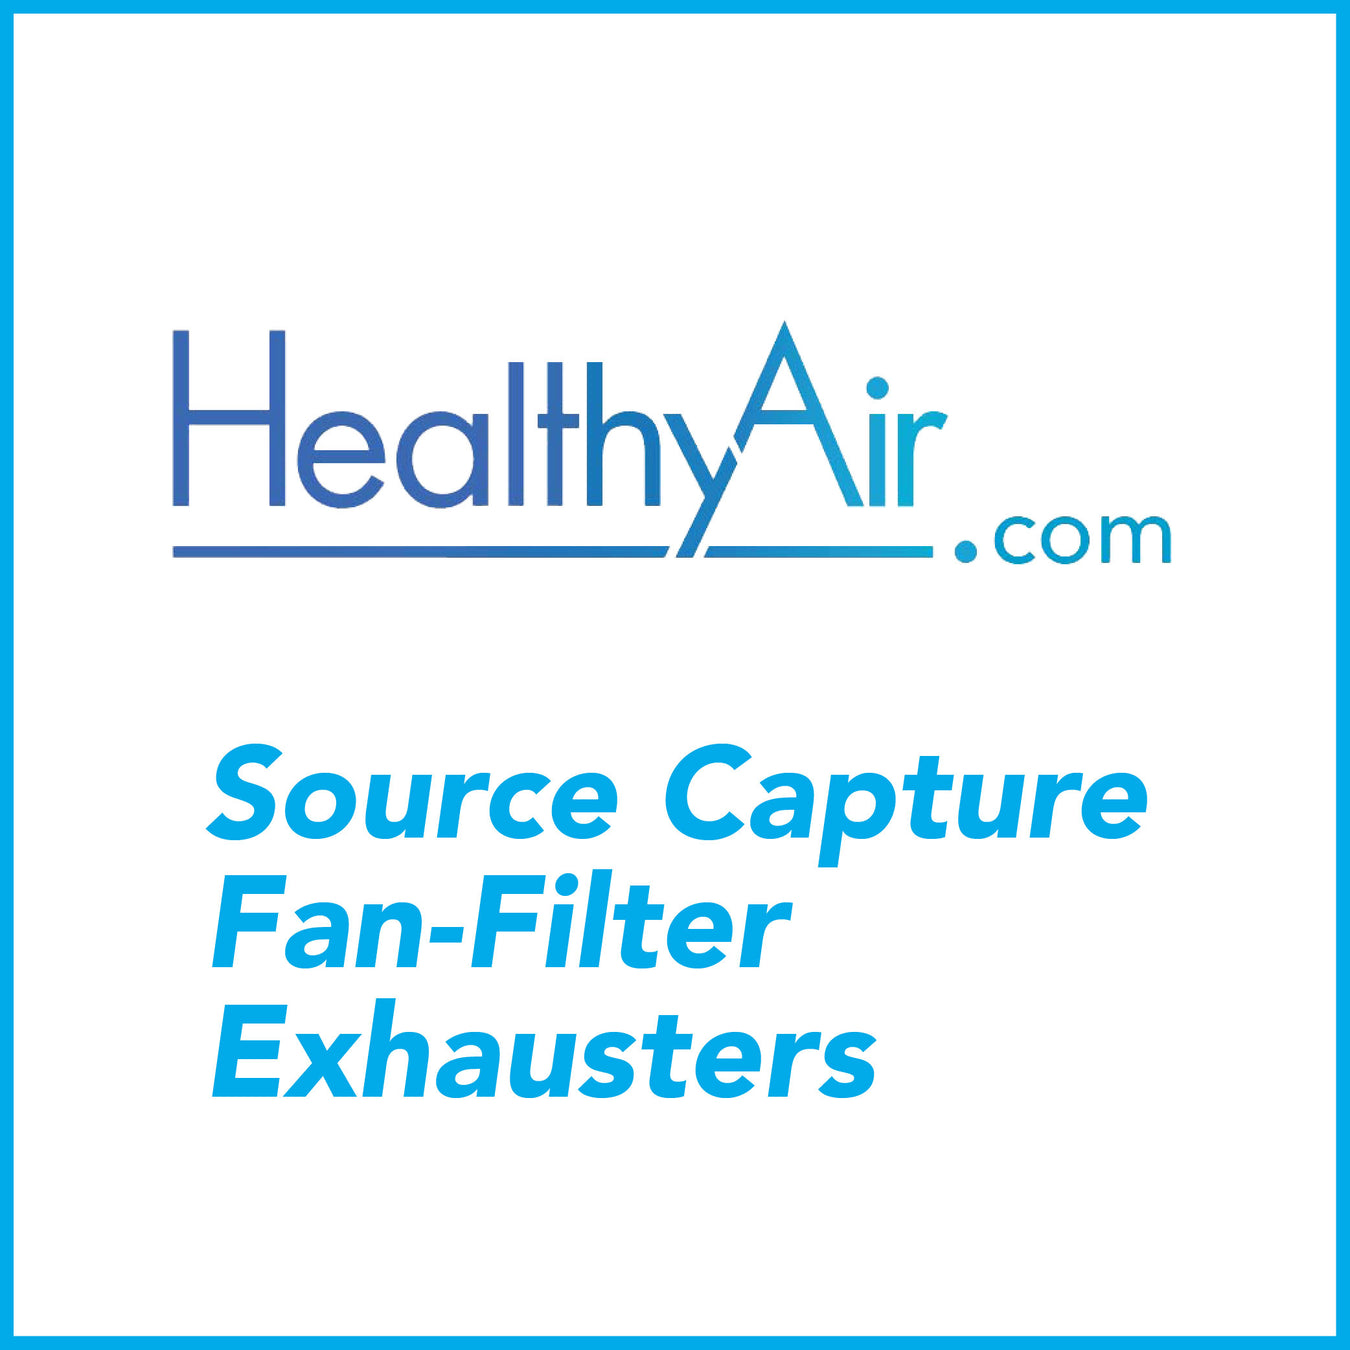 Source Capture Fan-Filter Exhausters